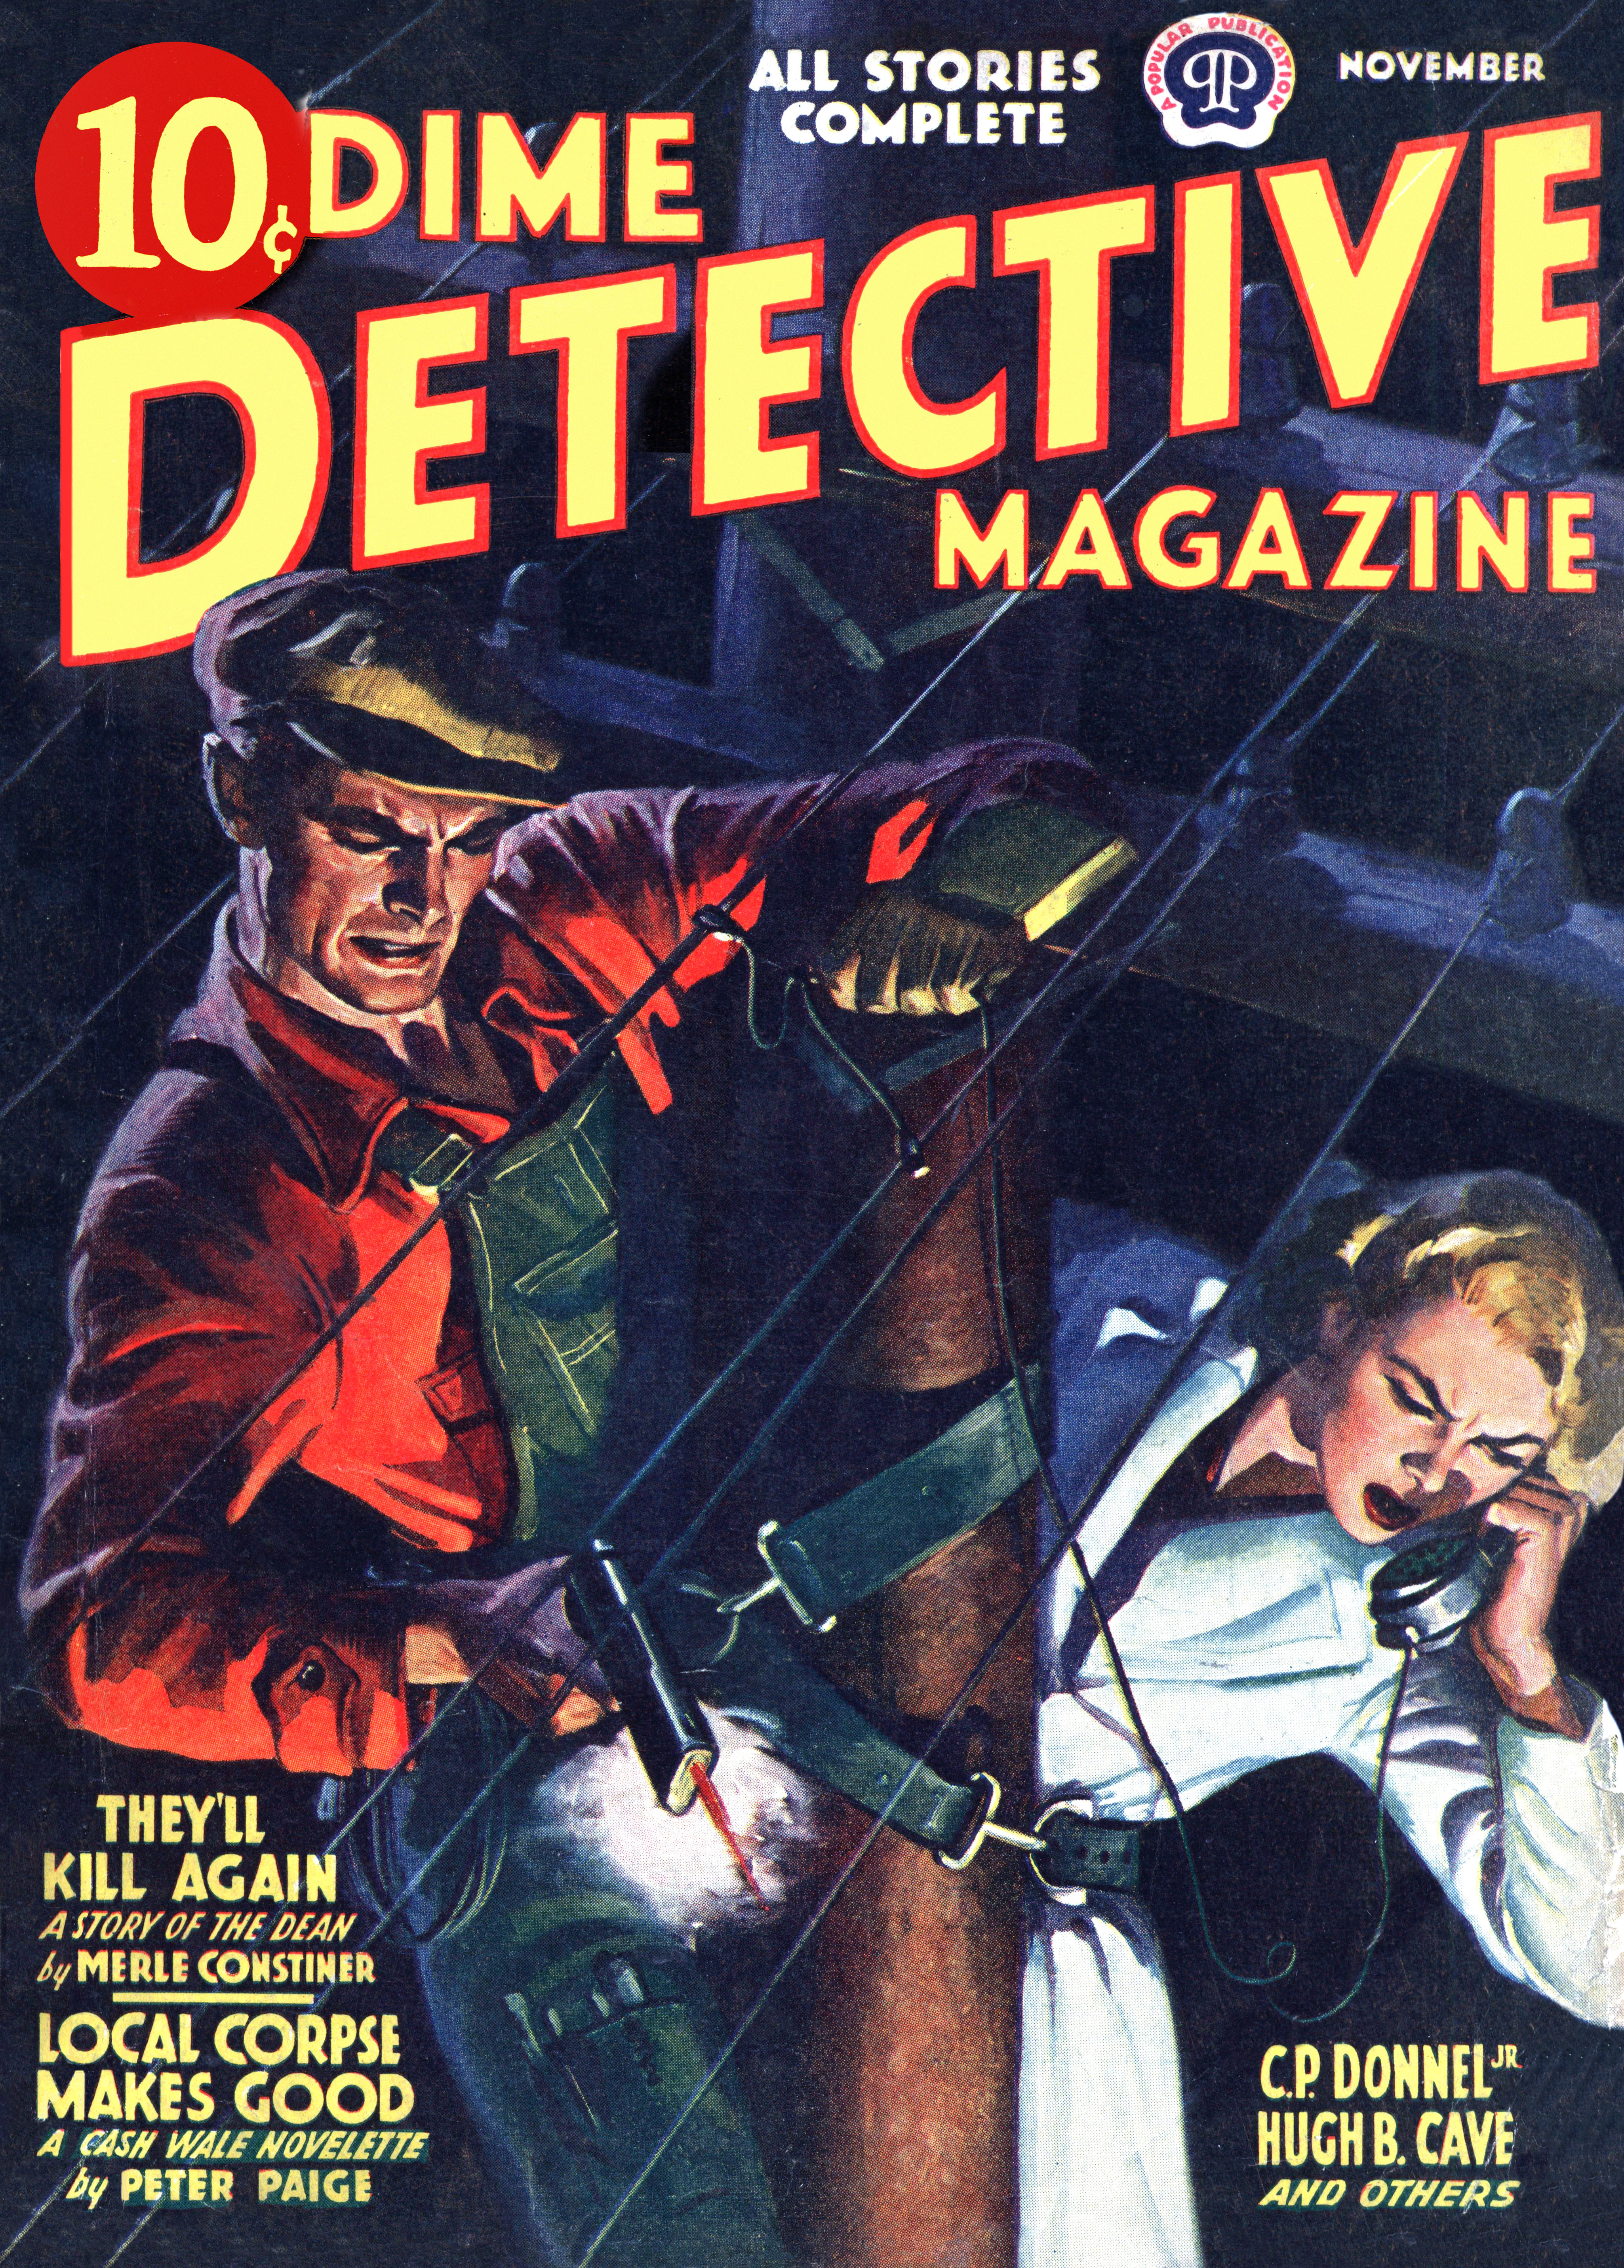 50787731303-dime-detective-v37-n04-1941-11-cover